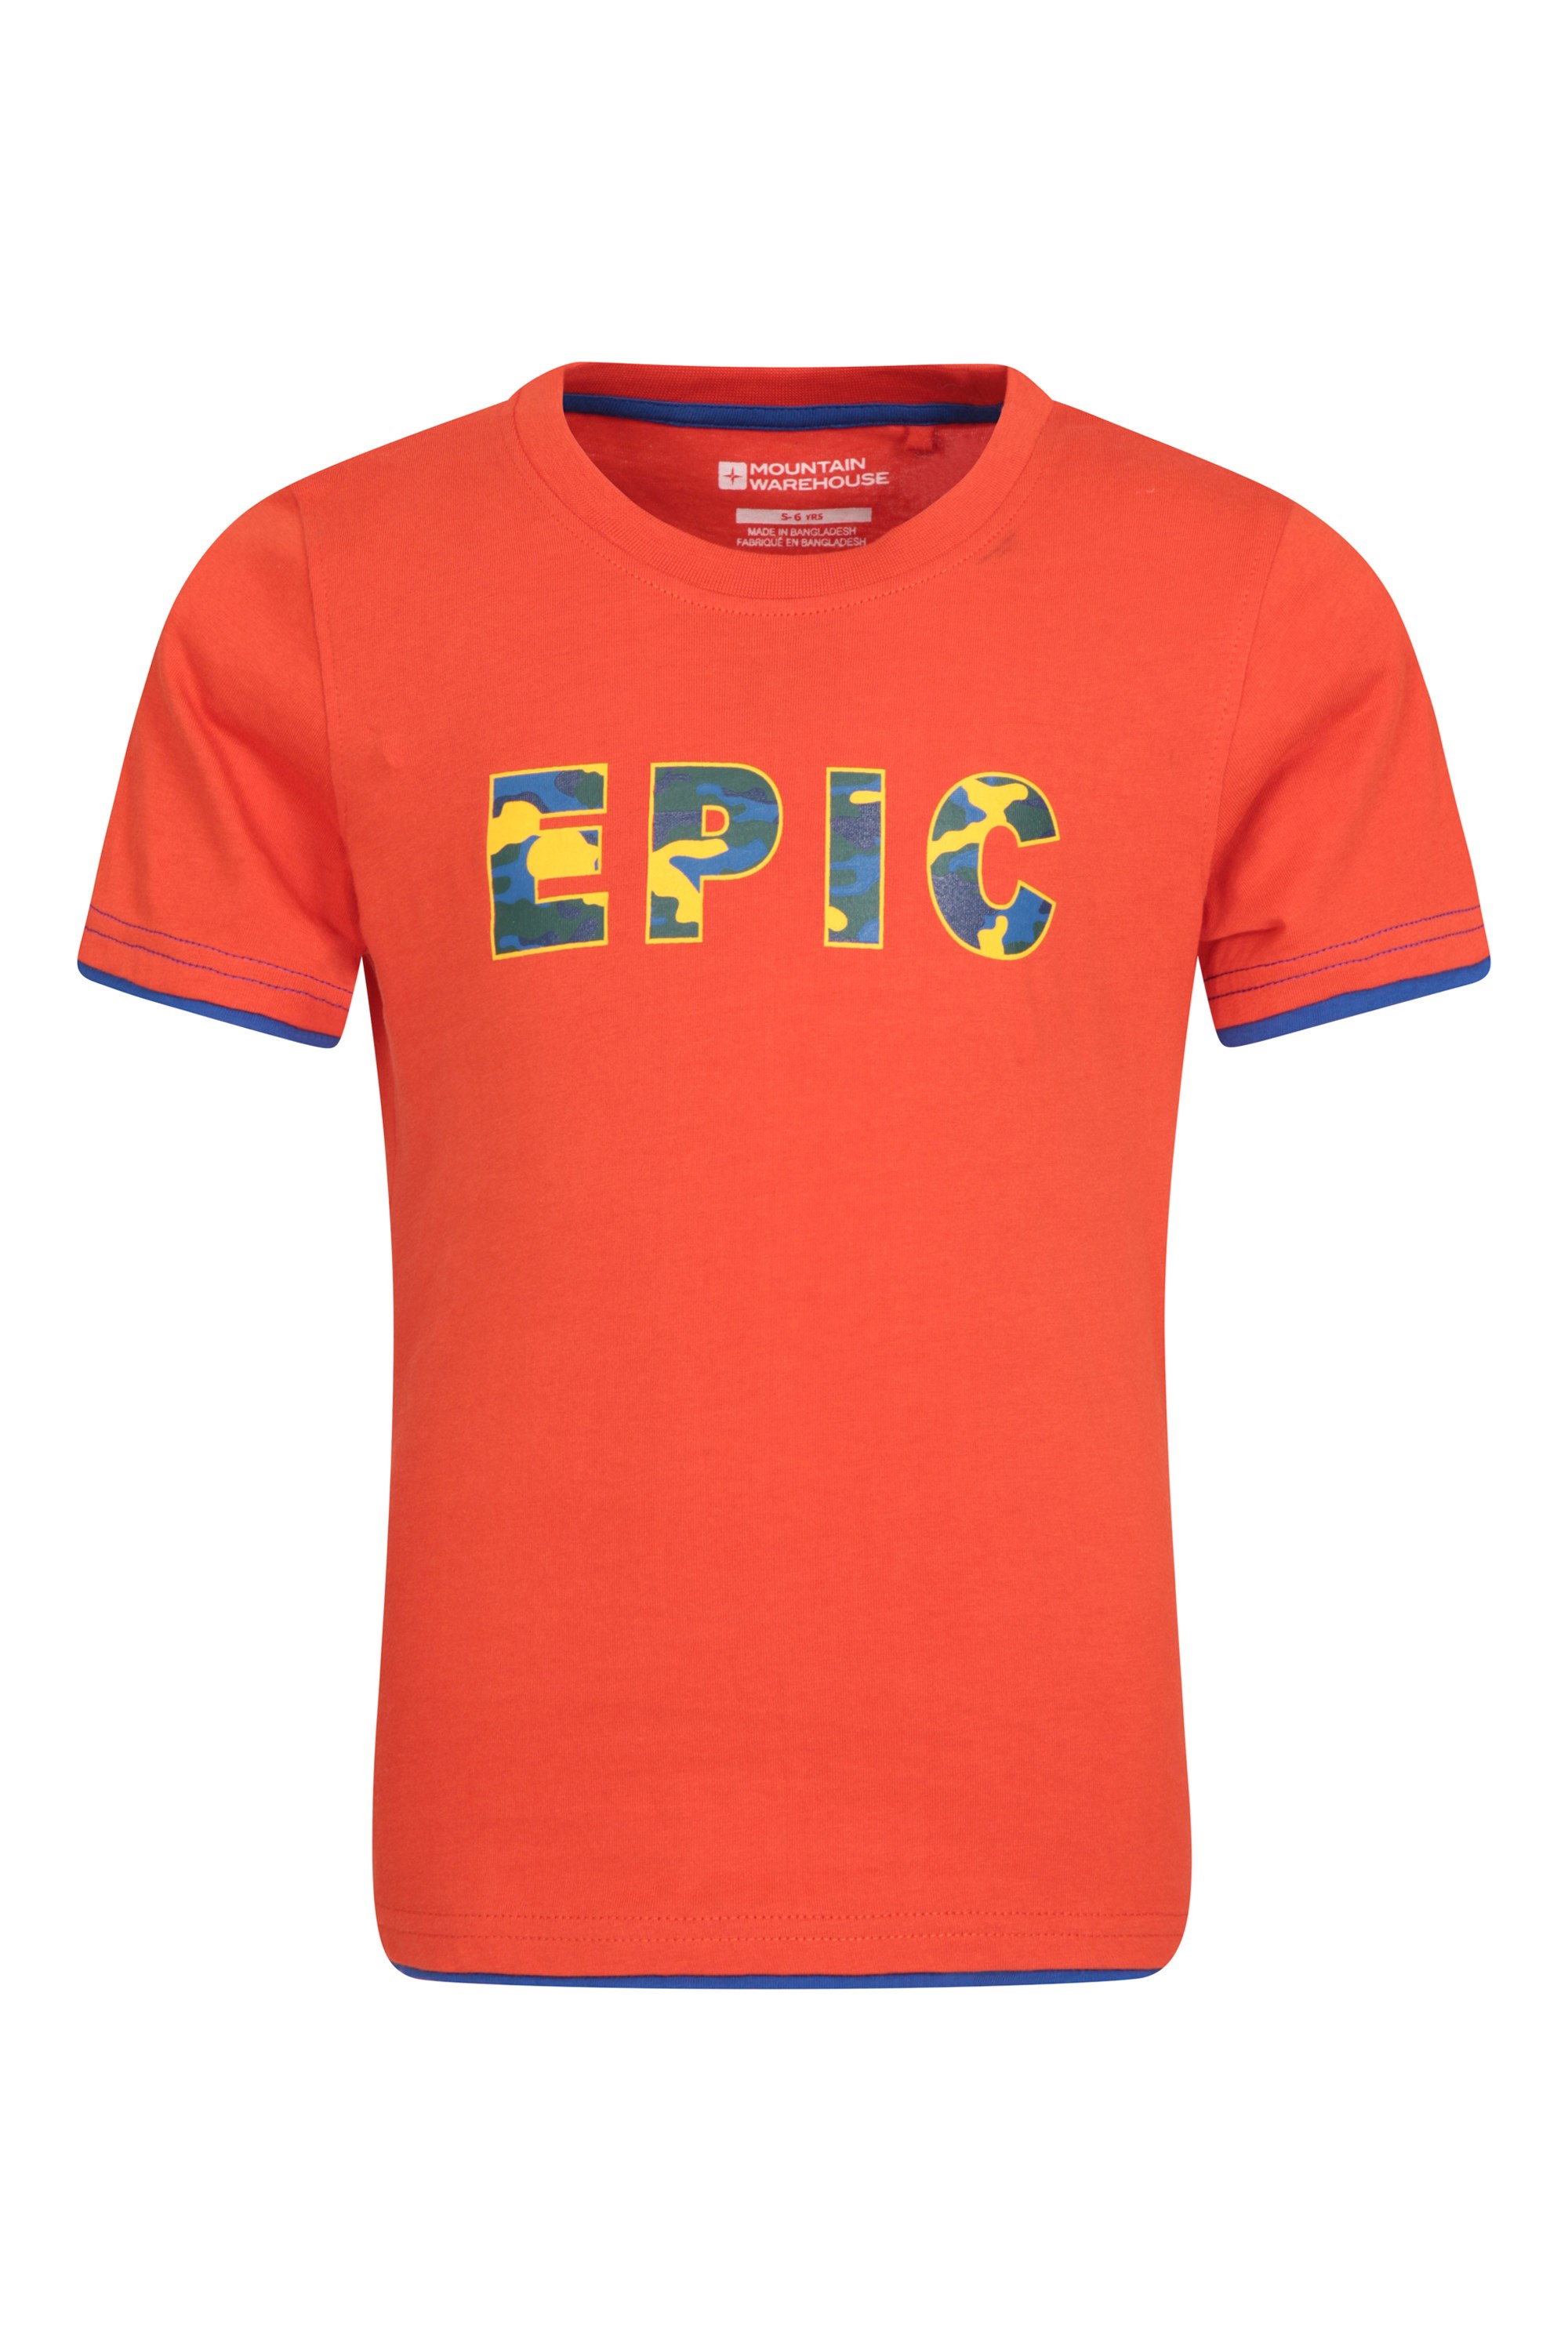 Epic Kids TShirt Mountain Warehouse GB